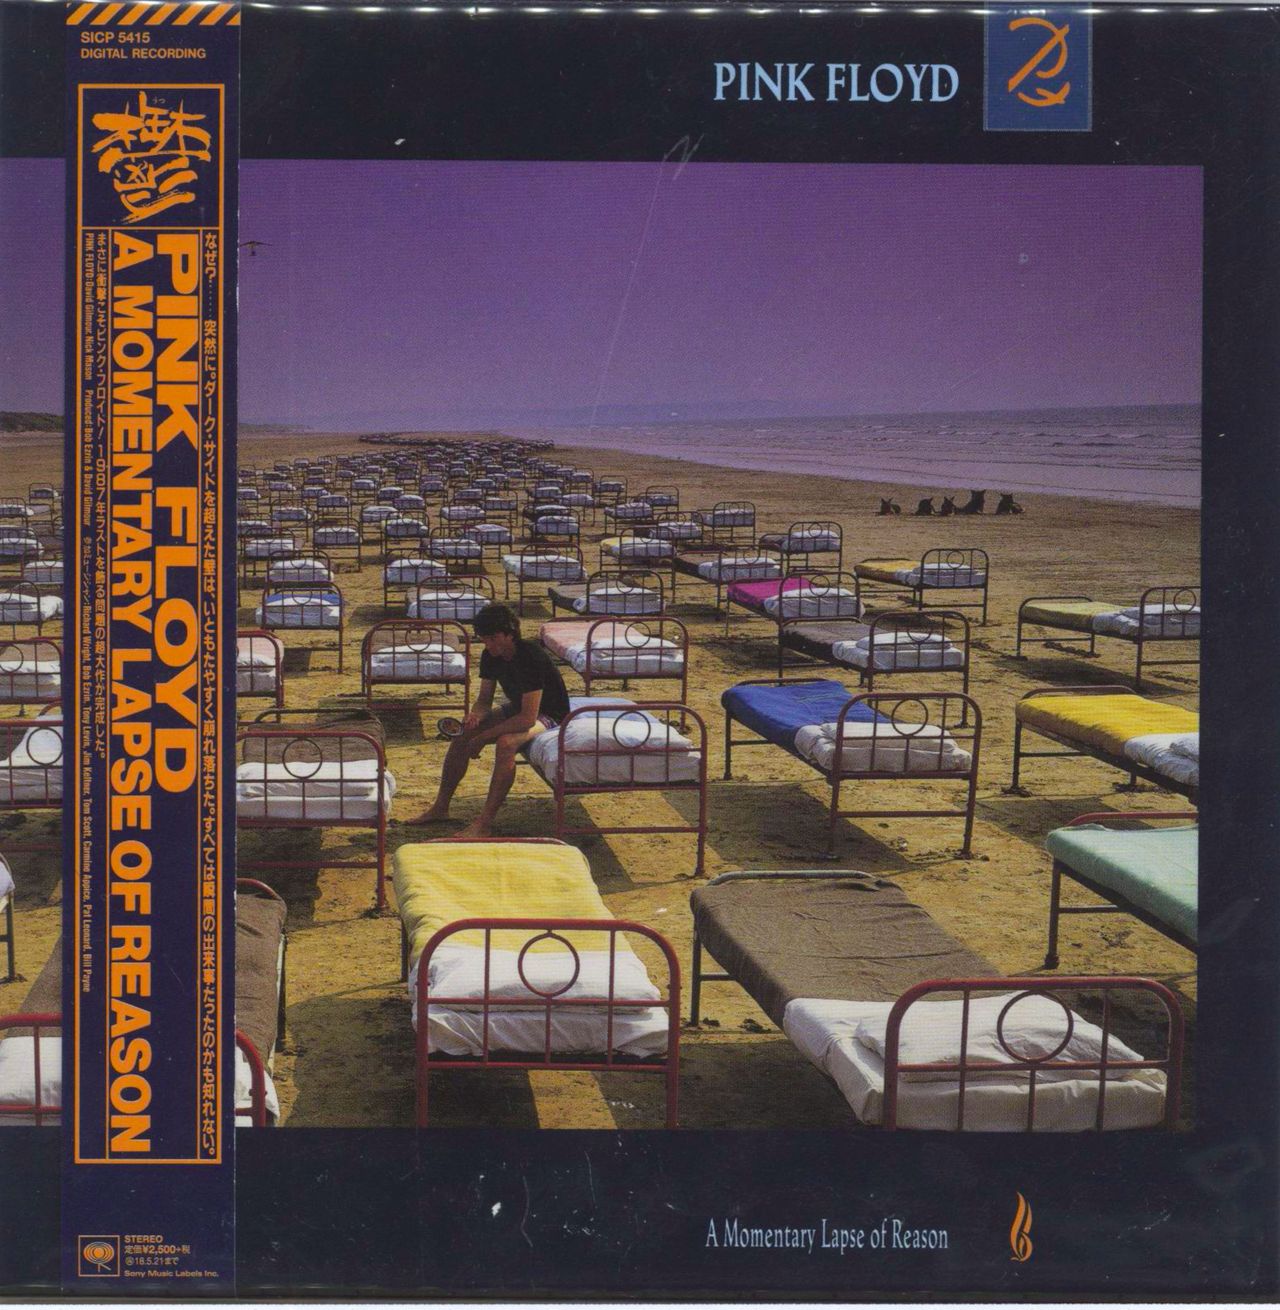 Pink Floyd A Momentary Lapse Of Reason Japanese CD album — RareVinyl.com